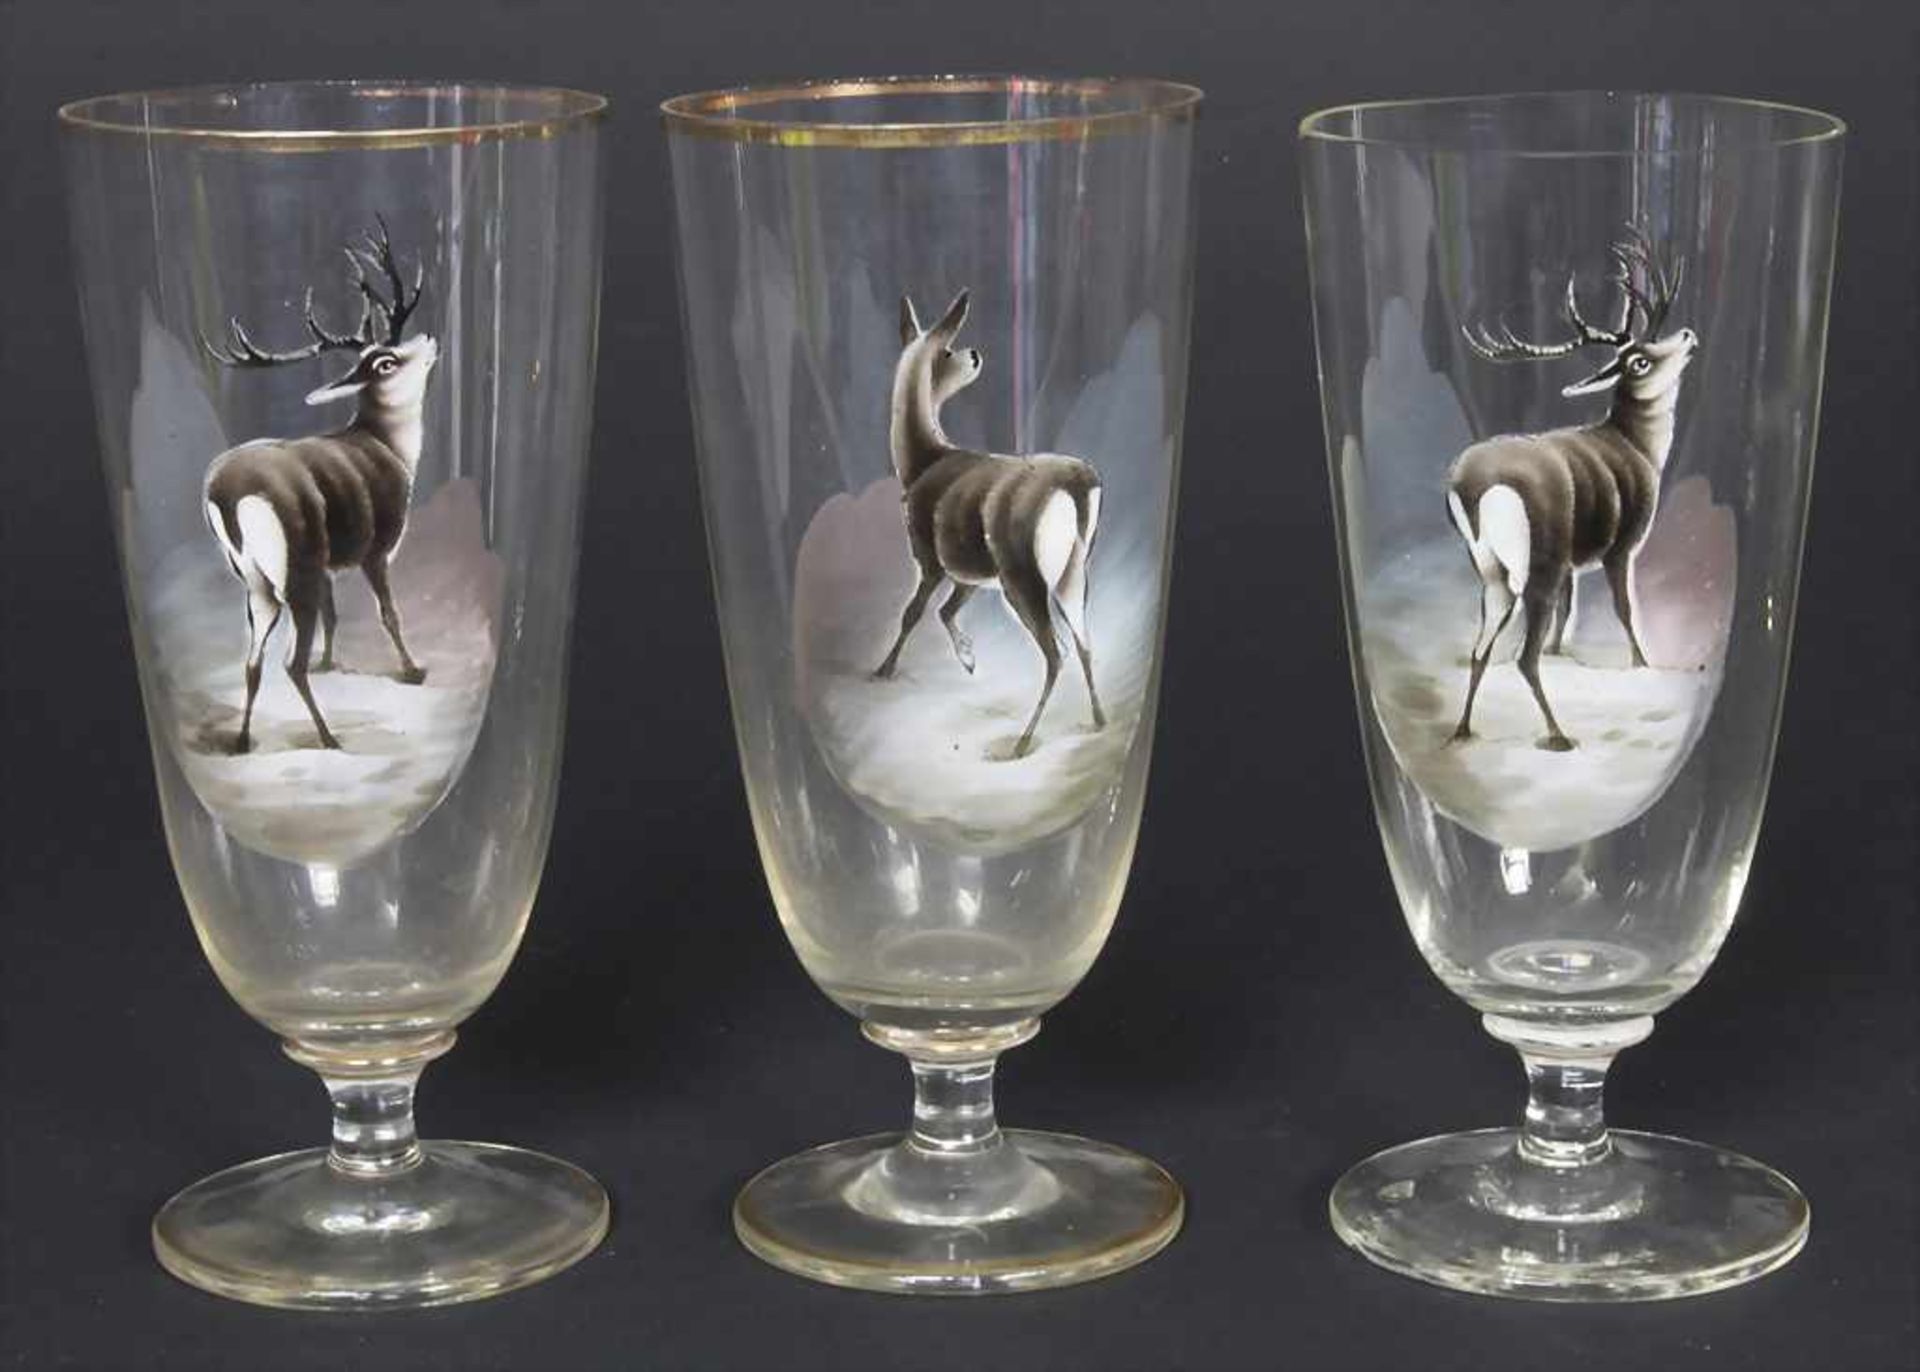 Saftkrug und 6 Gläser mit Hirschmotiven / A decanter and 6 glasses with deer decor, um 1900 - Image 2 of 6